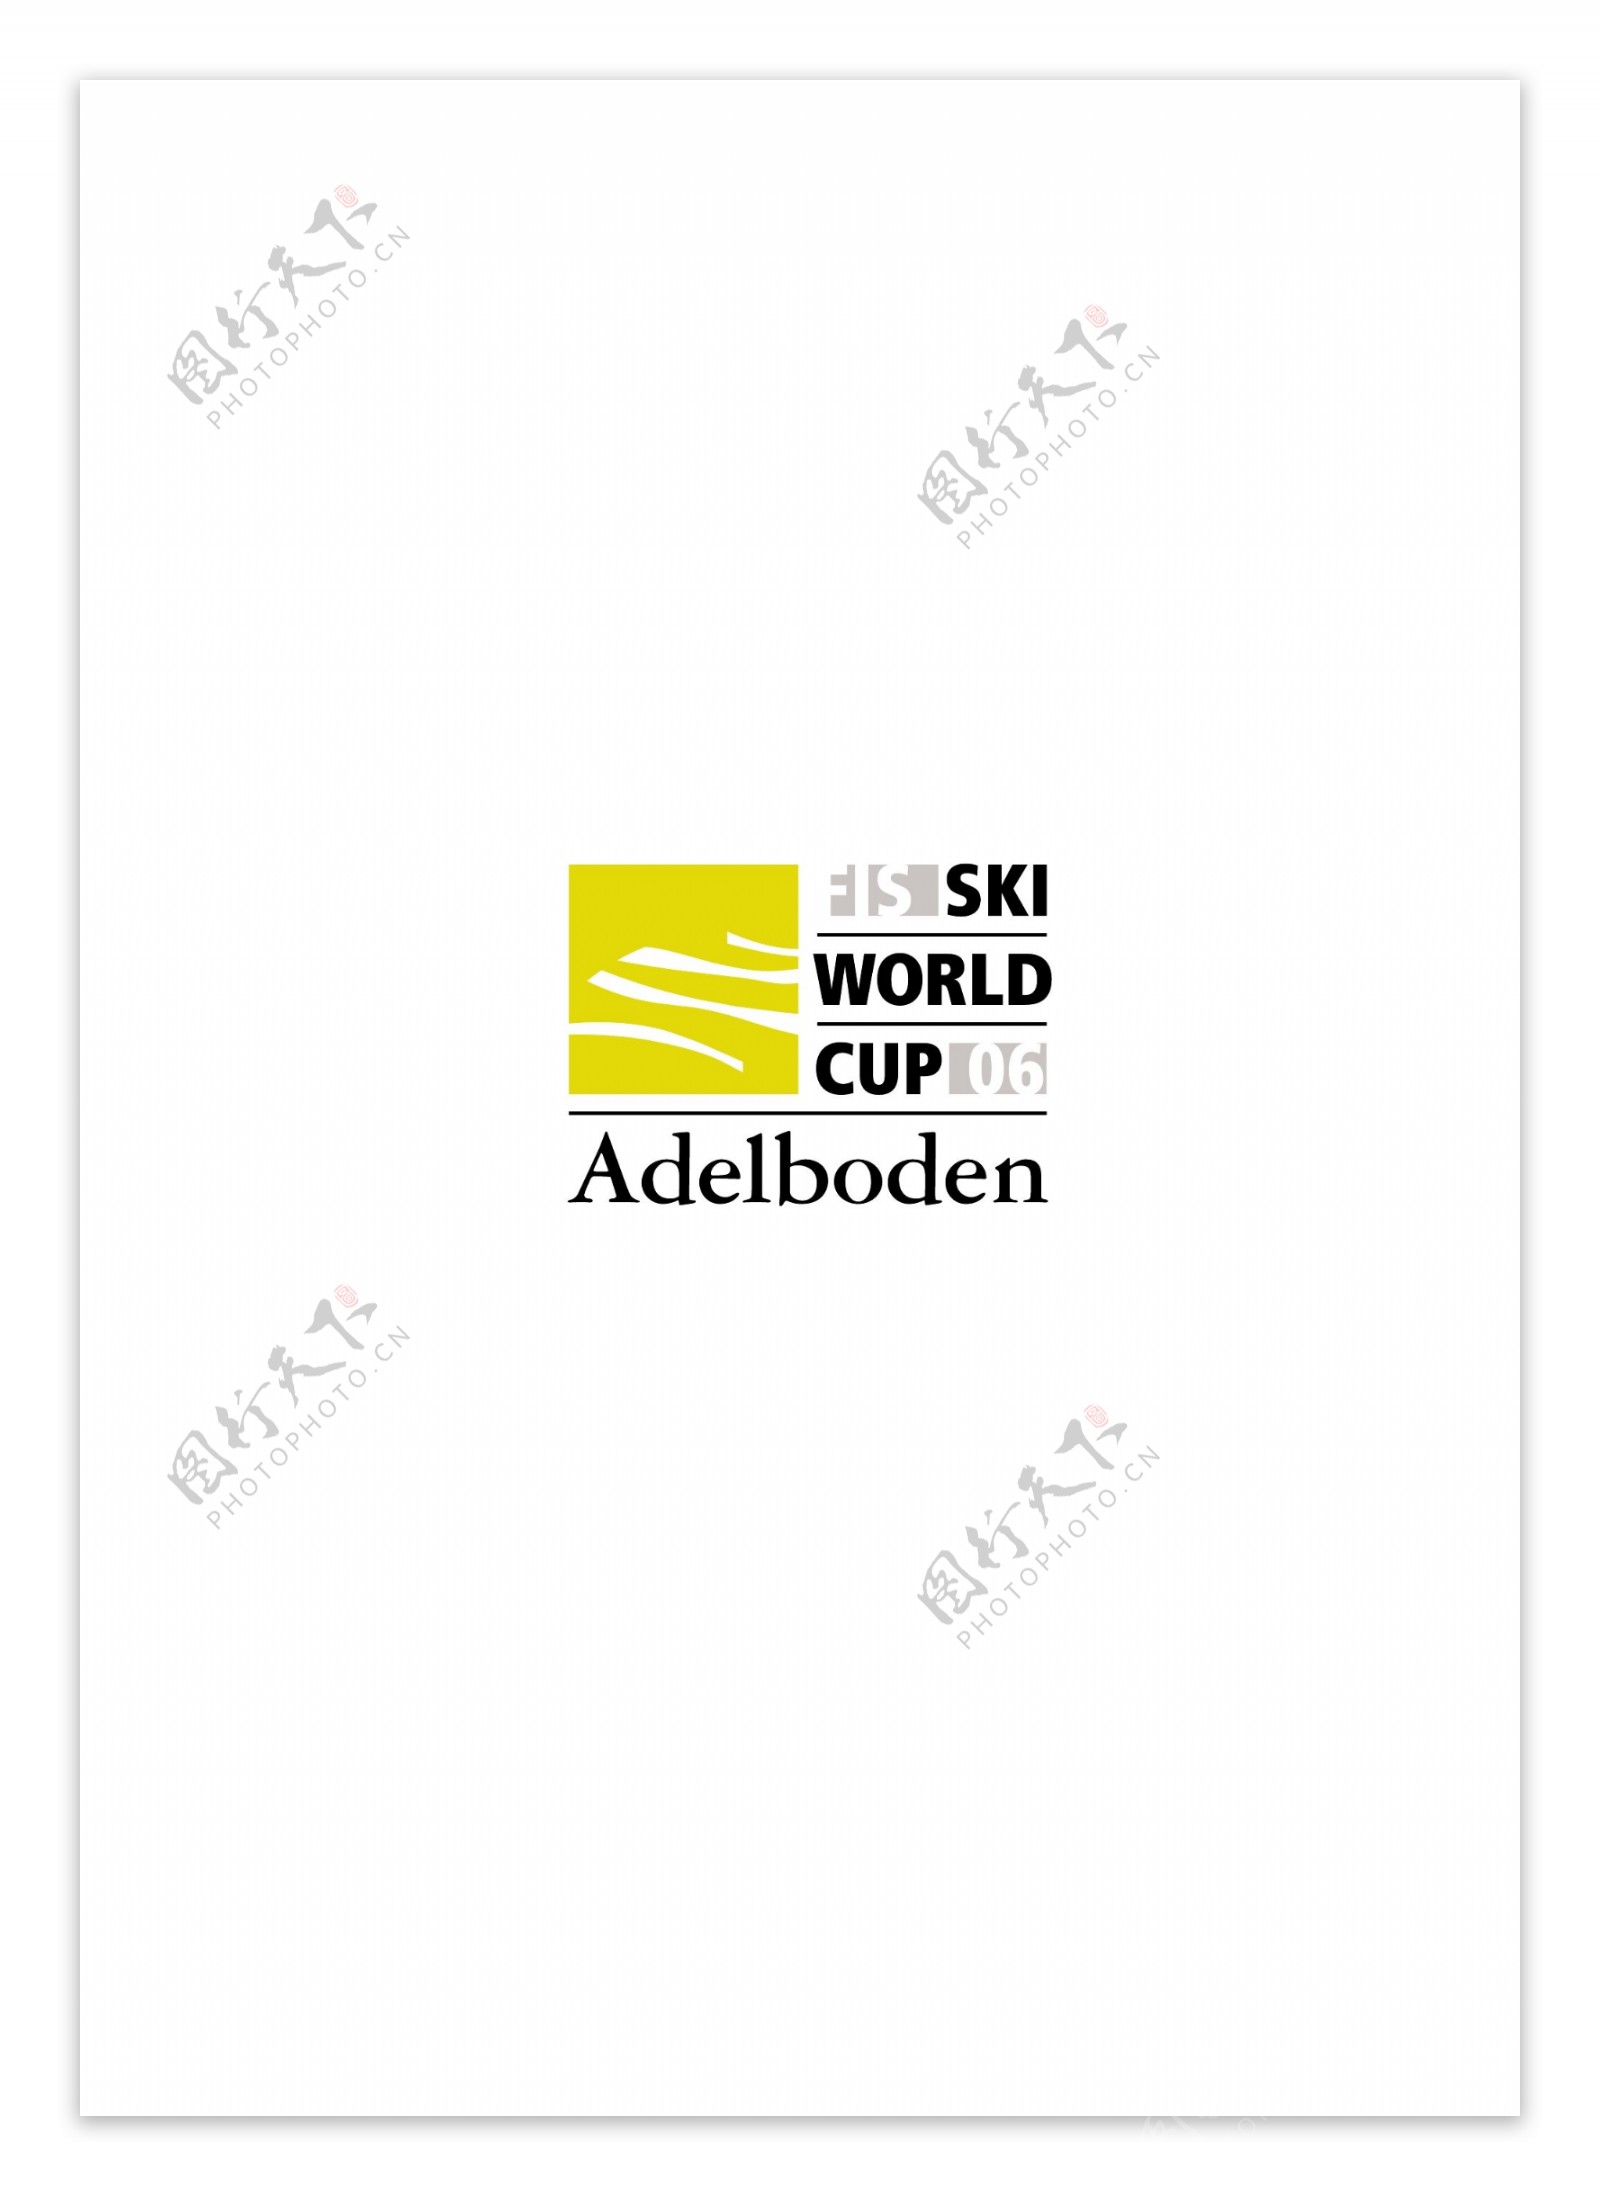 AdelbodenFISSkiWorldCup2006logo设计欣赏AdelbodenFISSkiWorldCup2006体育赛事标志下载标志设计欣赏